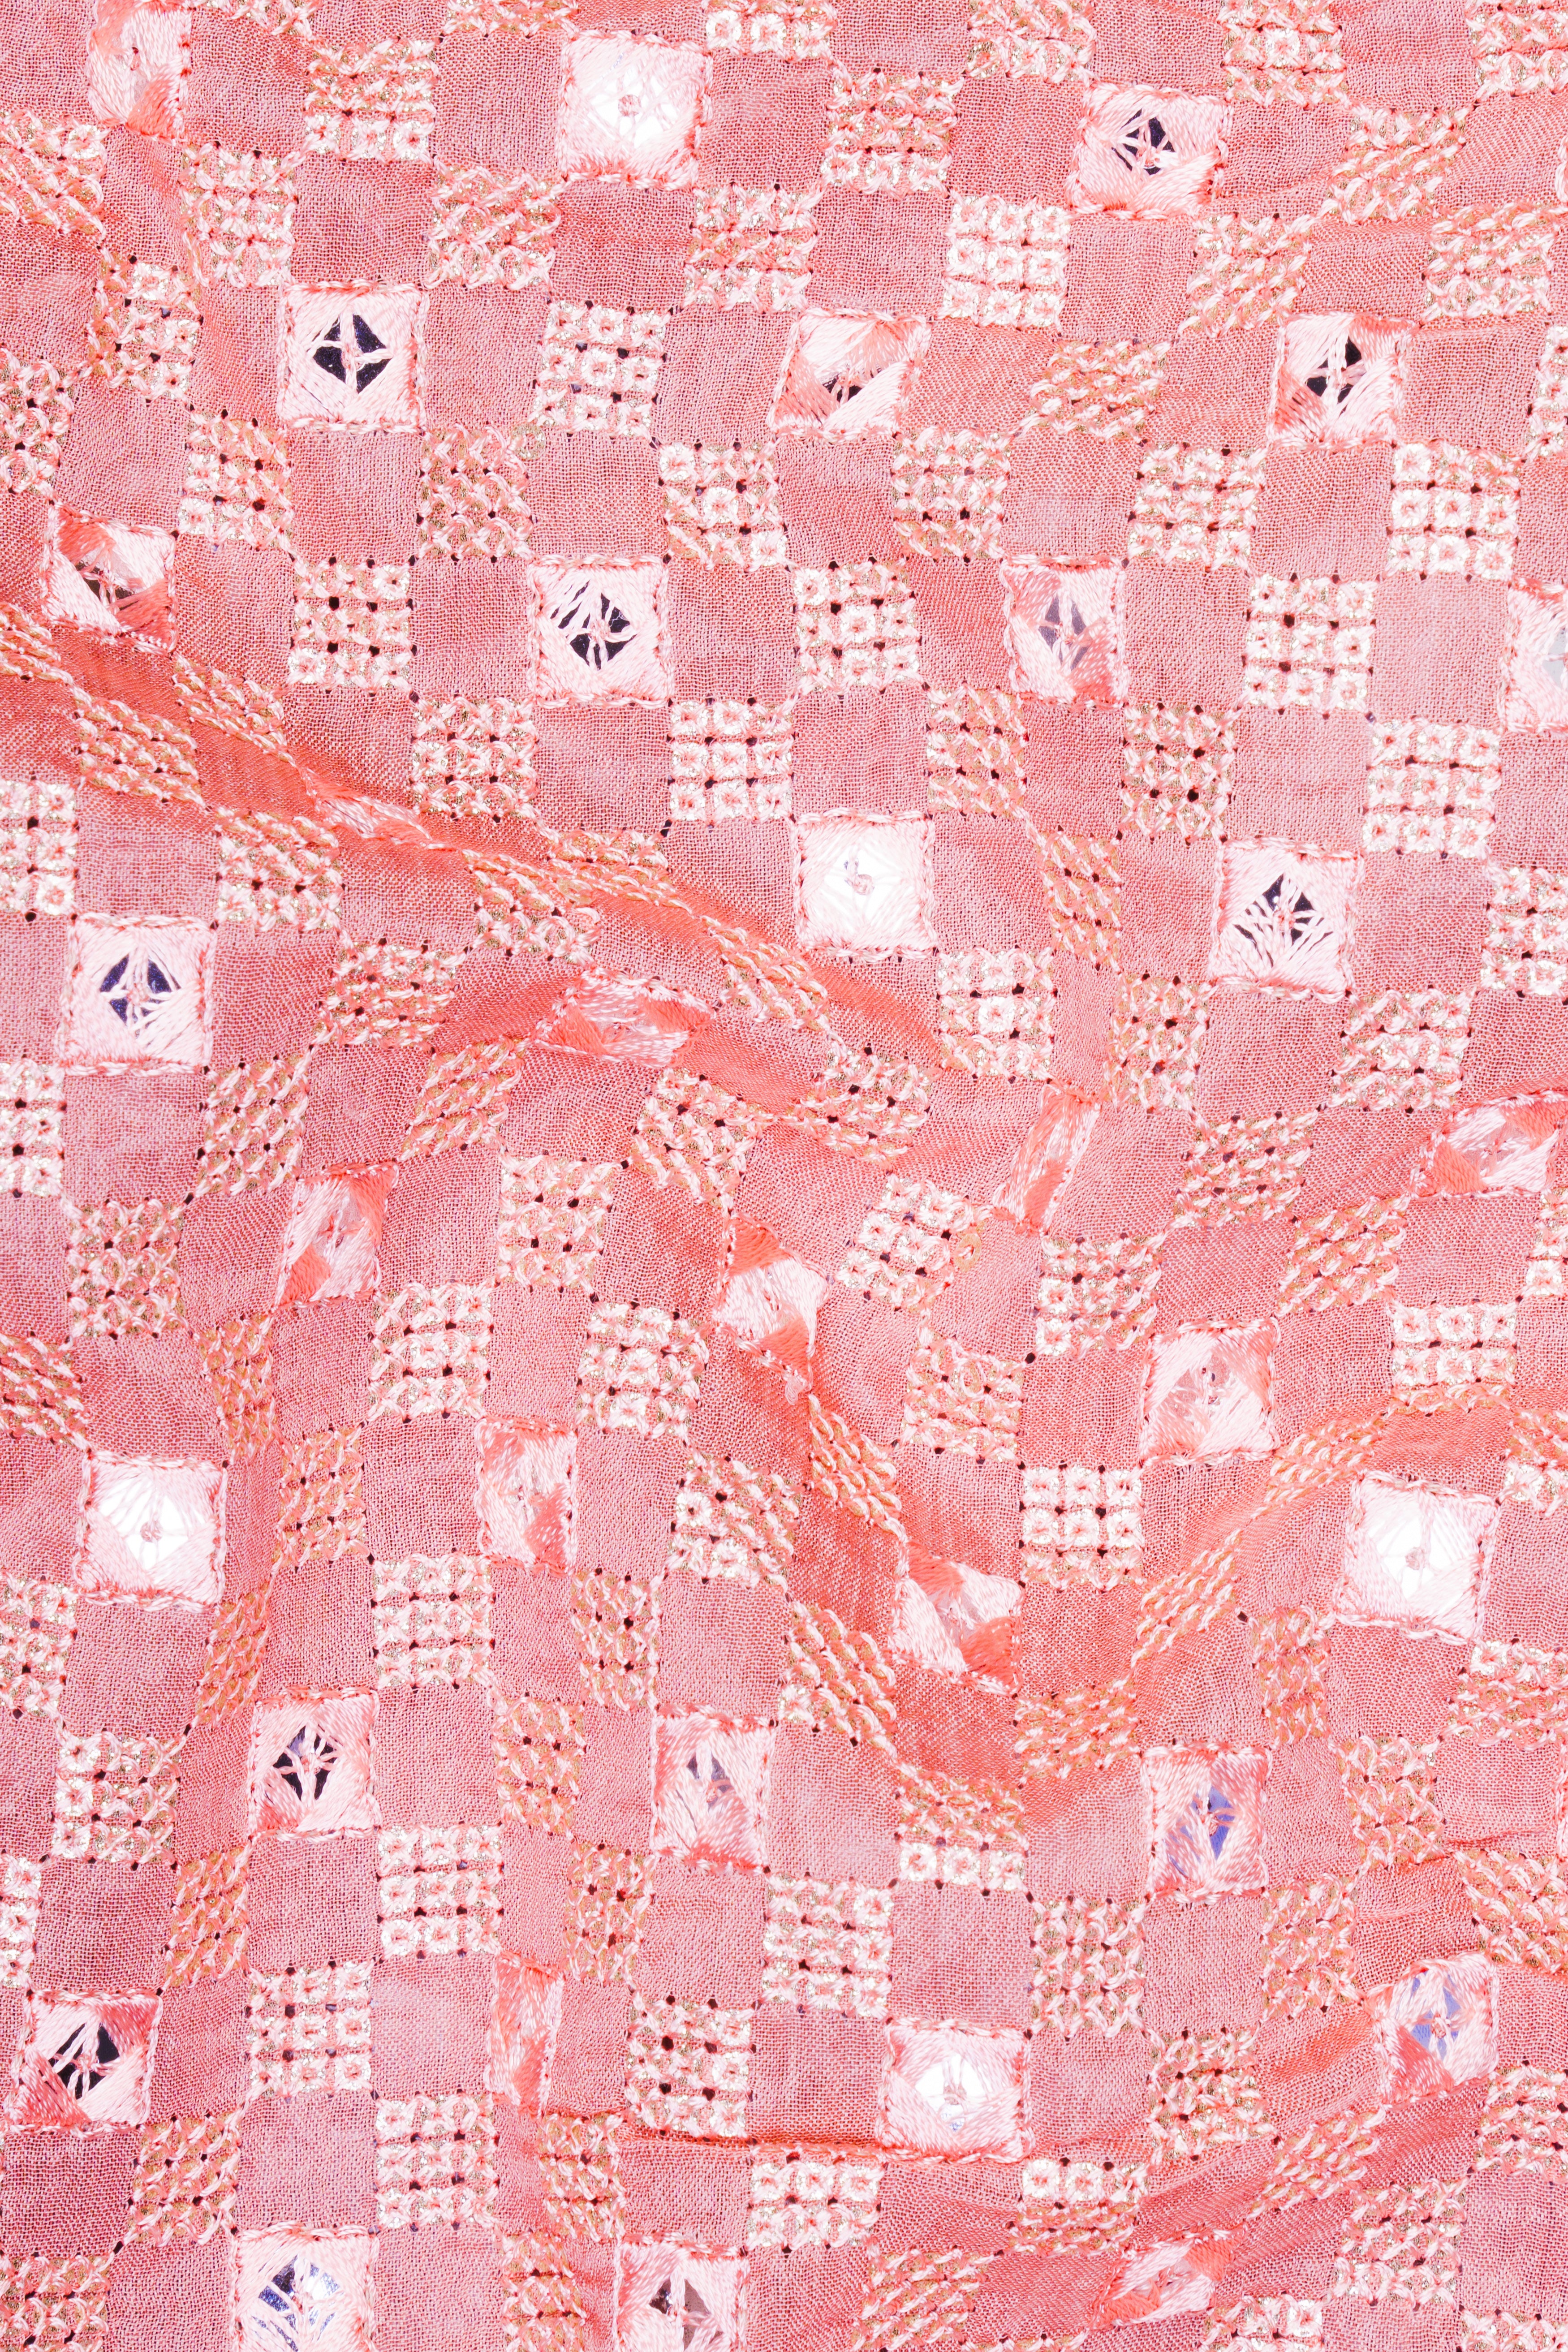 Turkish Pink Embroidered Cross Placket Bandhgala Jodhpuri